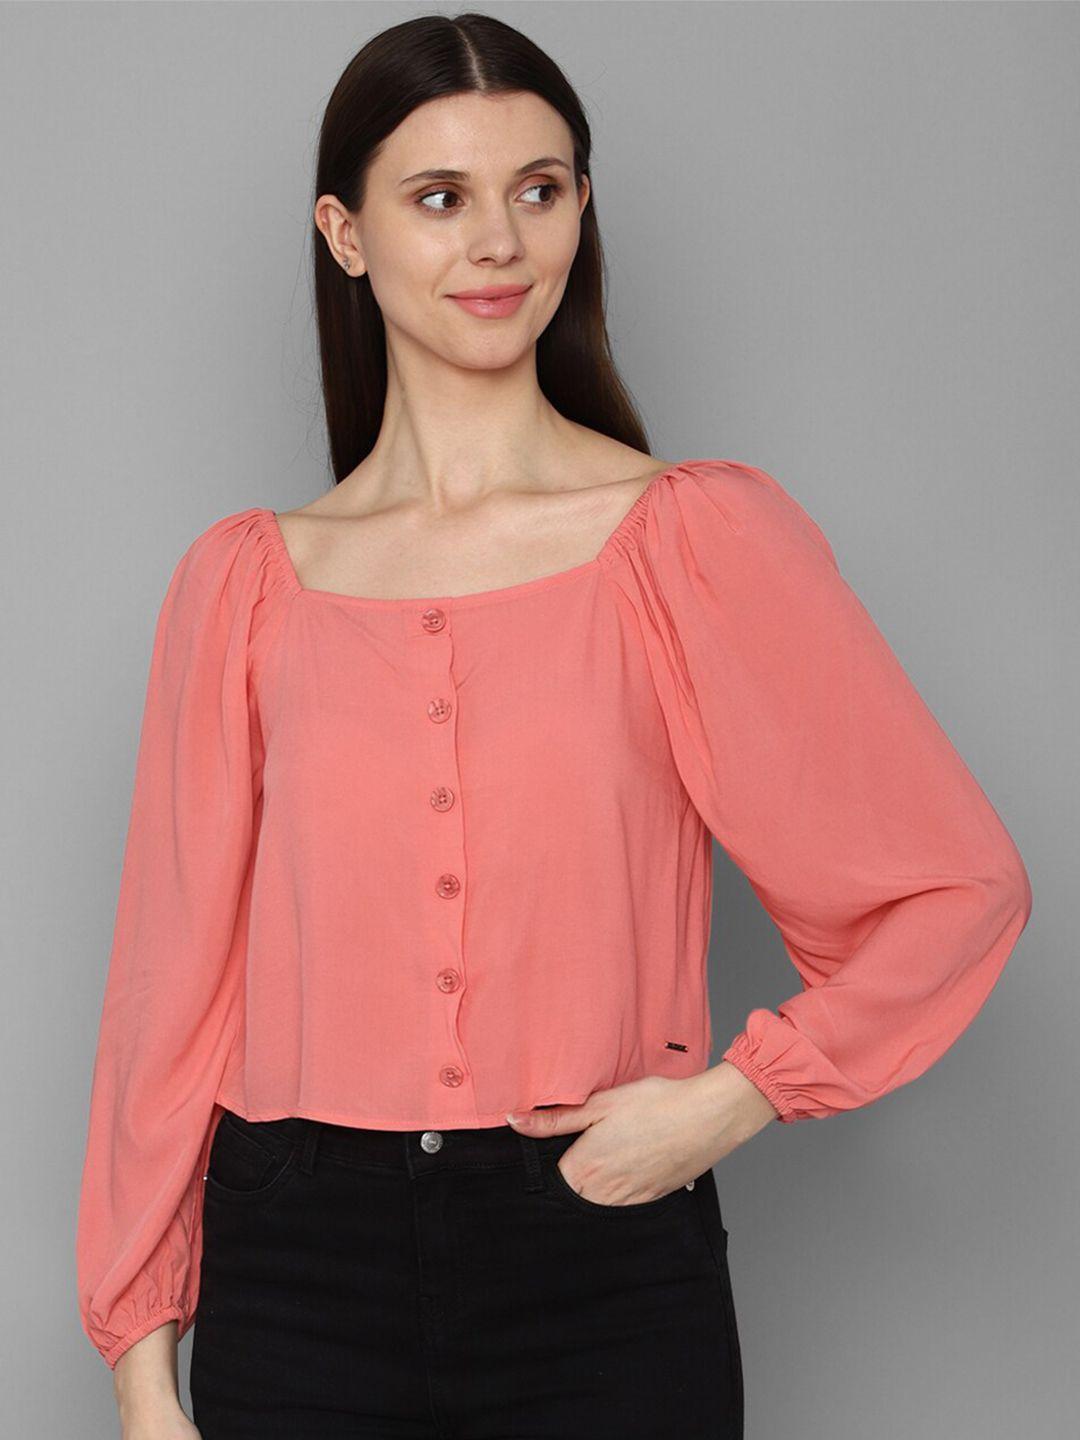 allen-solly-woman-peach-coloured-shirt-style-crop-top